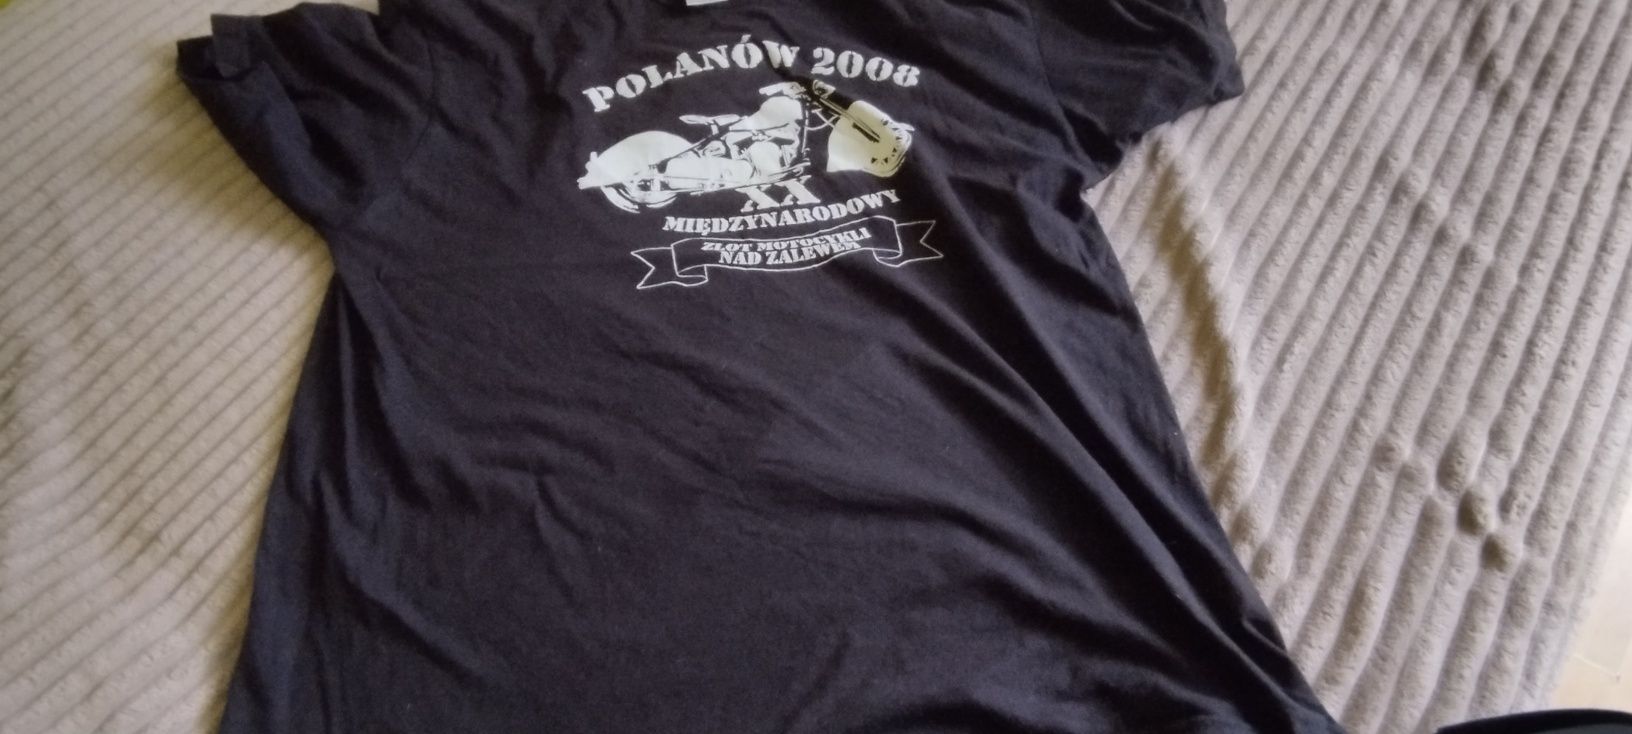 Koszulka Polanów ze zlotu